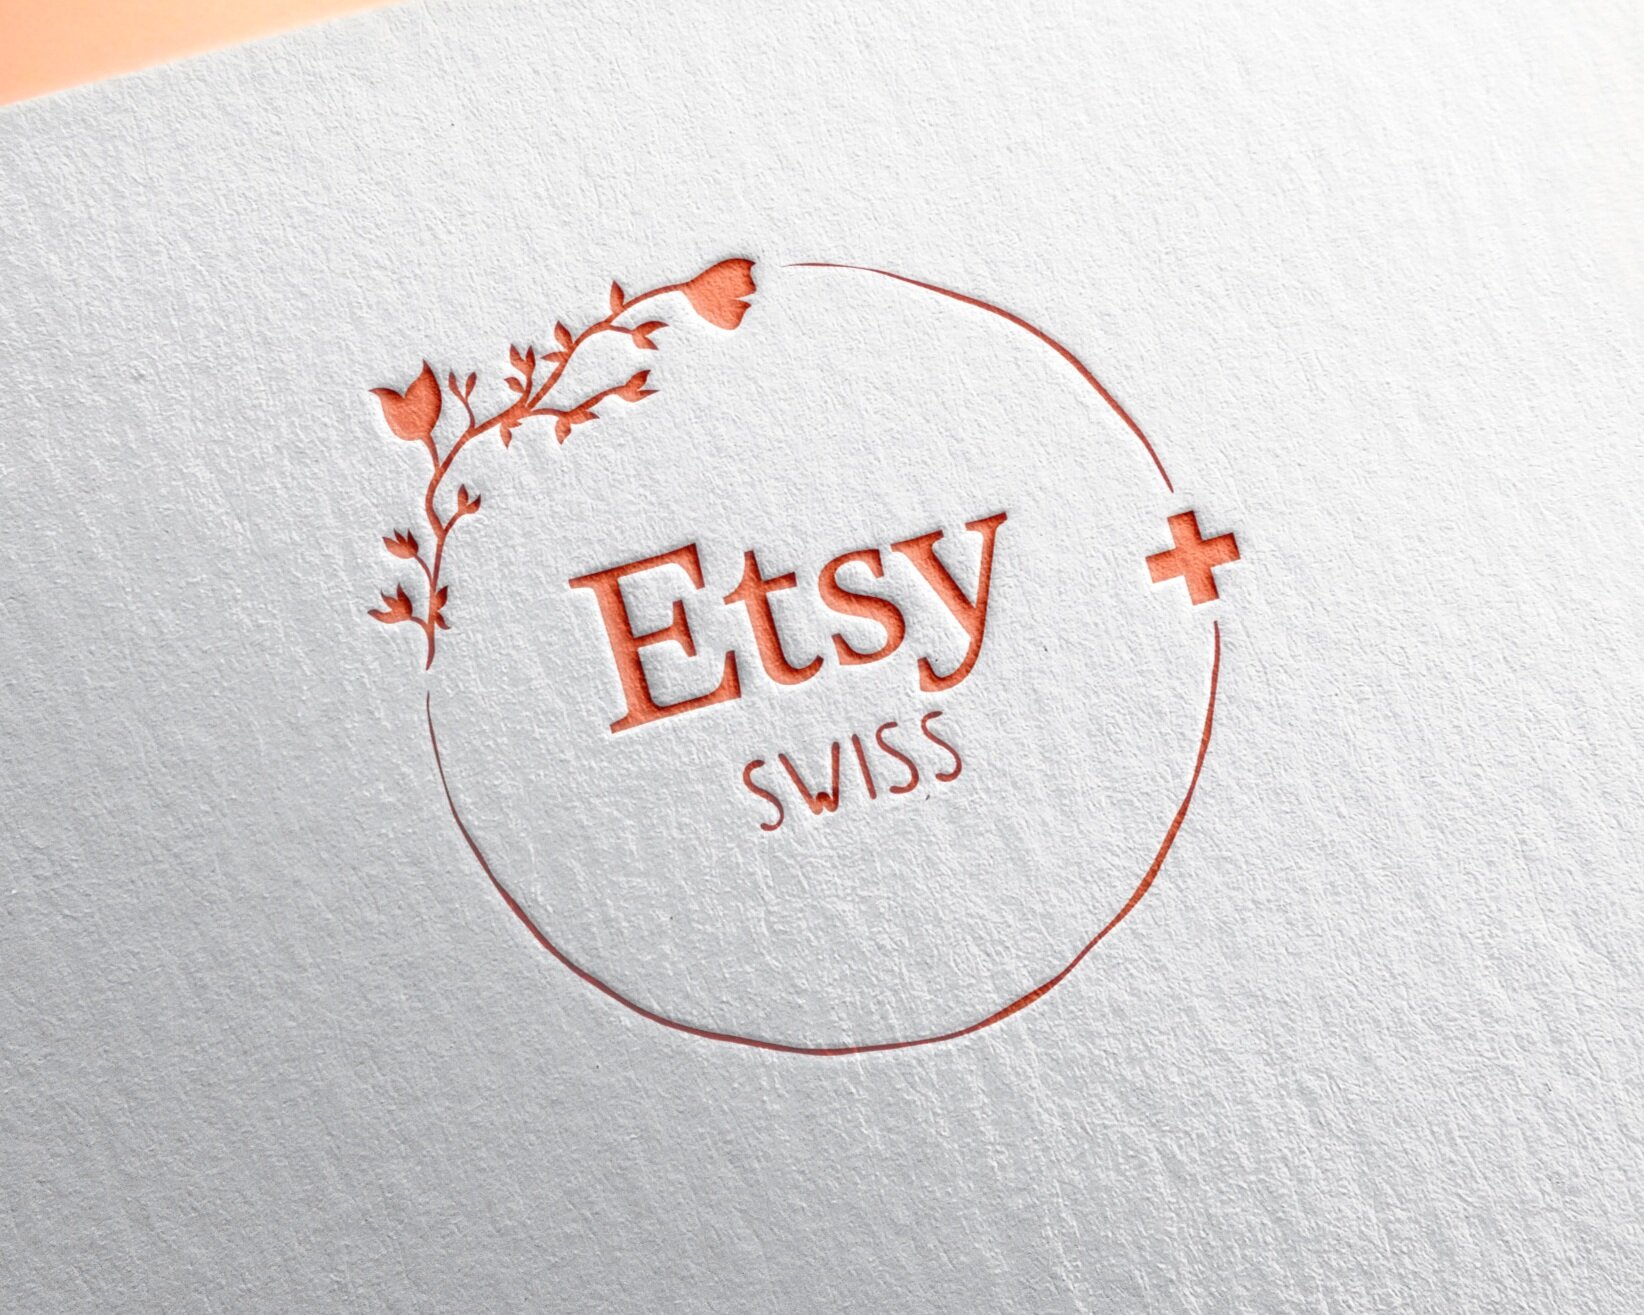 etsy swiss – création de logo